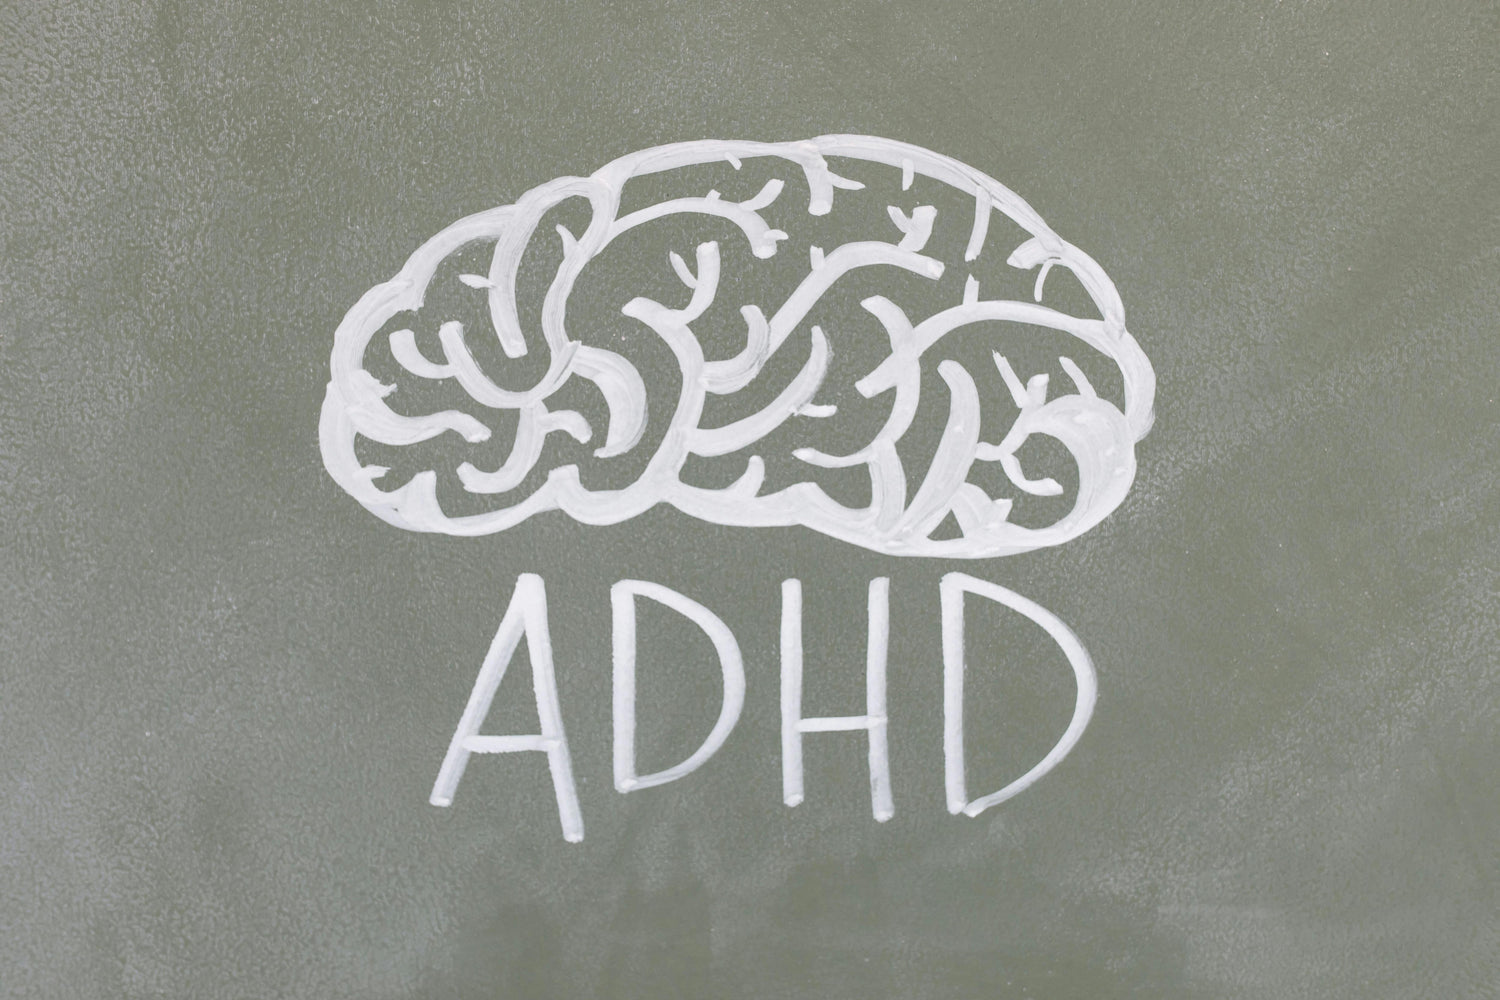 A chalk-drawn brain with ADHD written under it